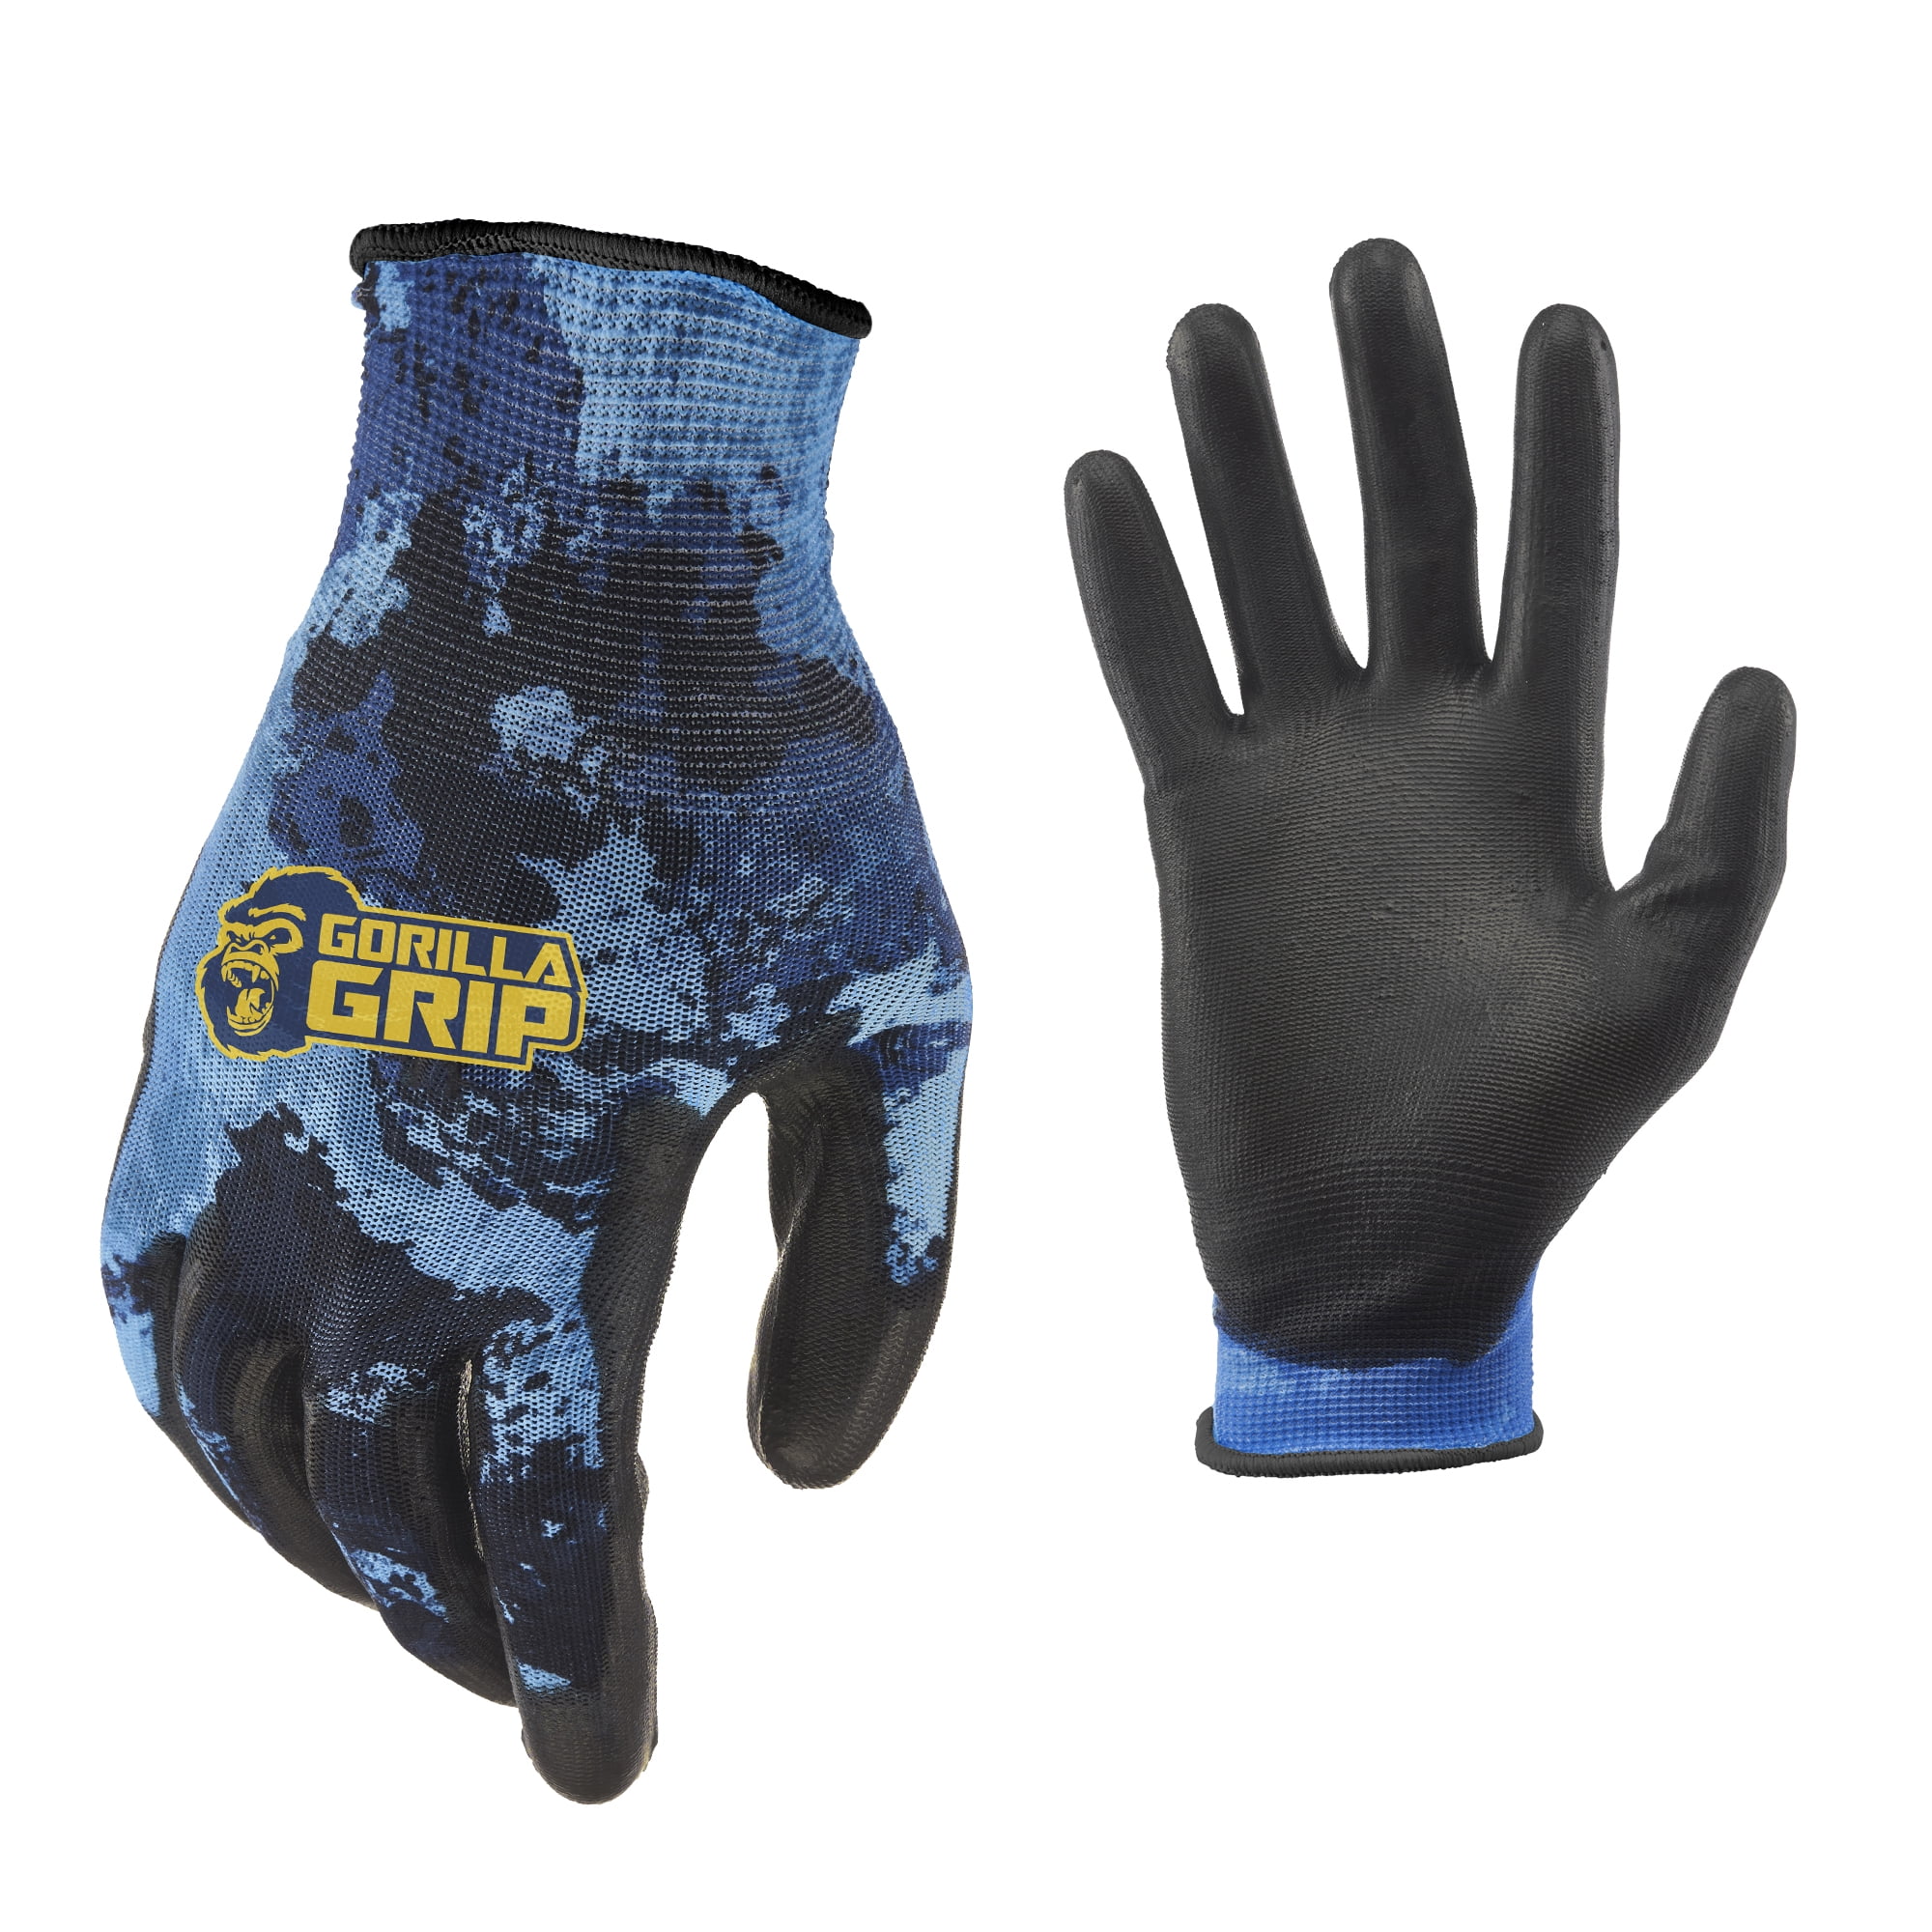 3 Pairs XL Gorilla Grip - Maximum Grip Gloves - Great for Fishing - Blue